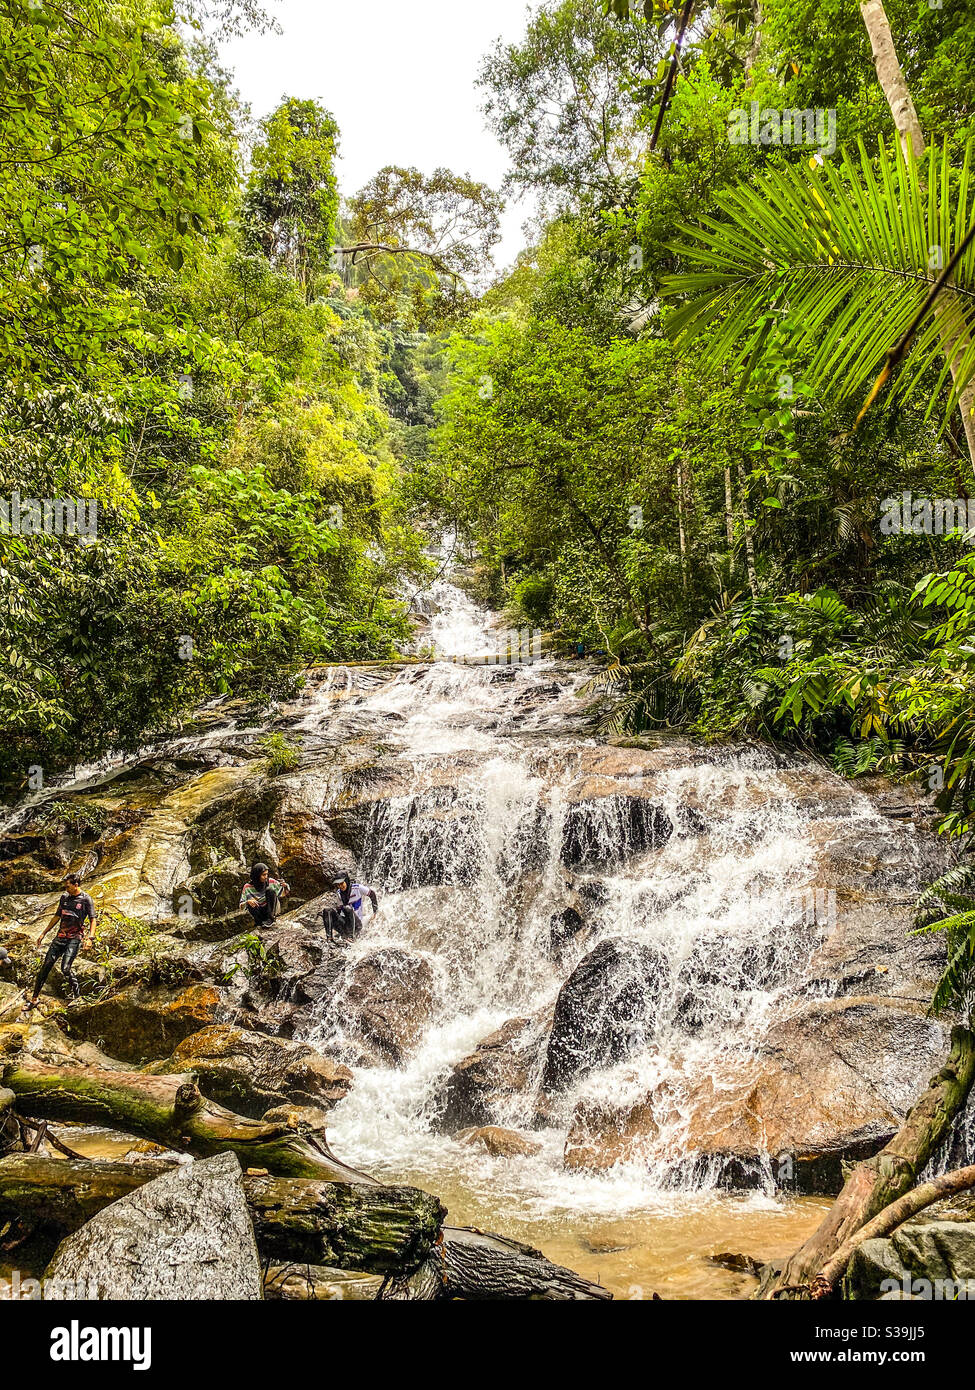 Kanching waterfall